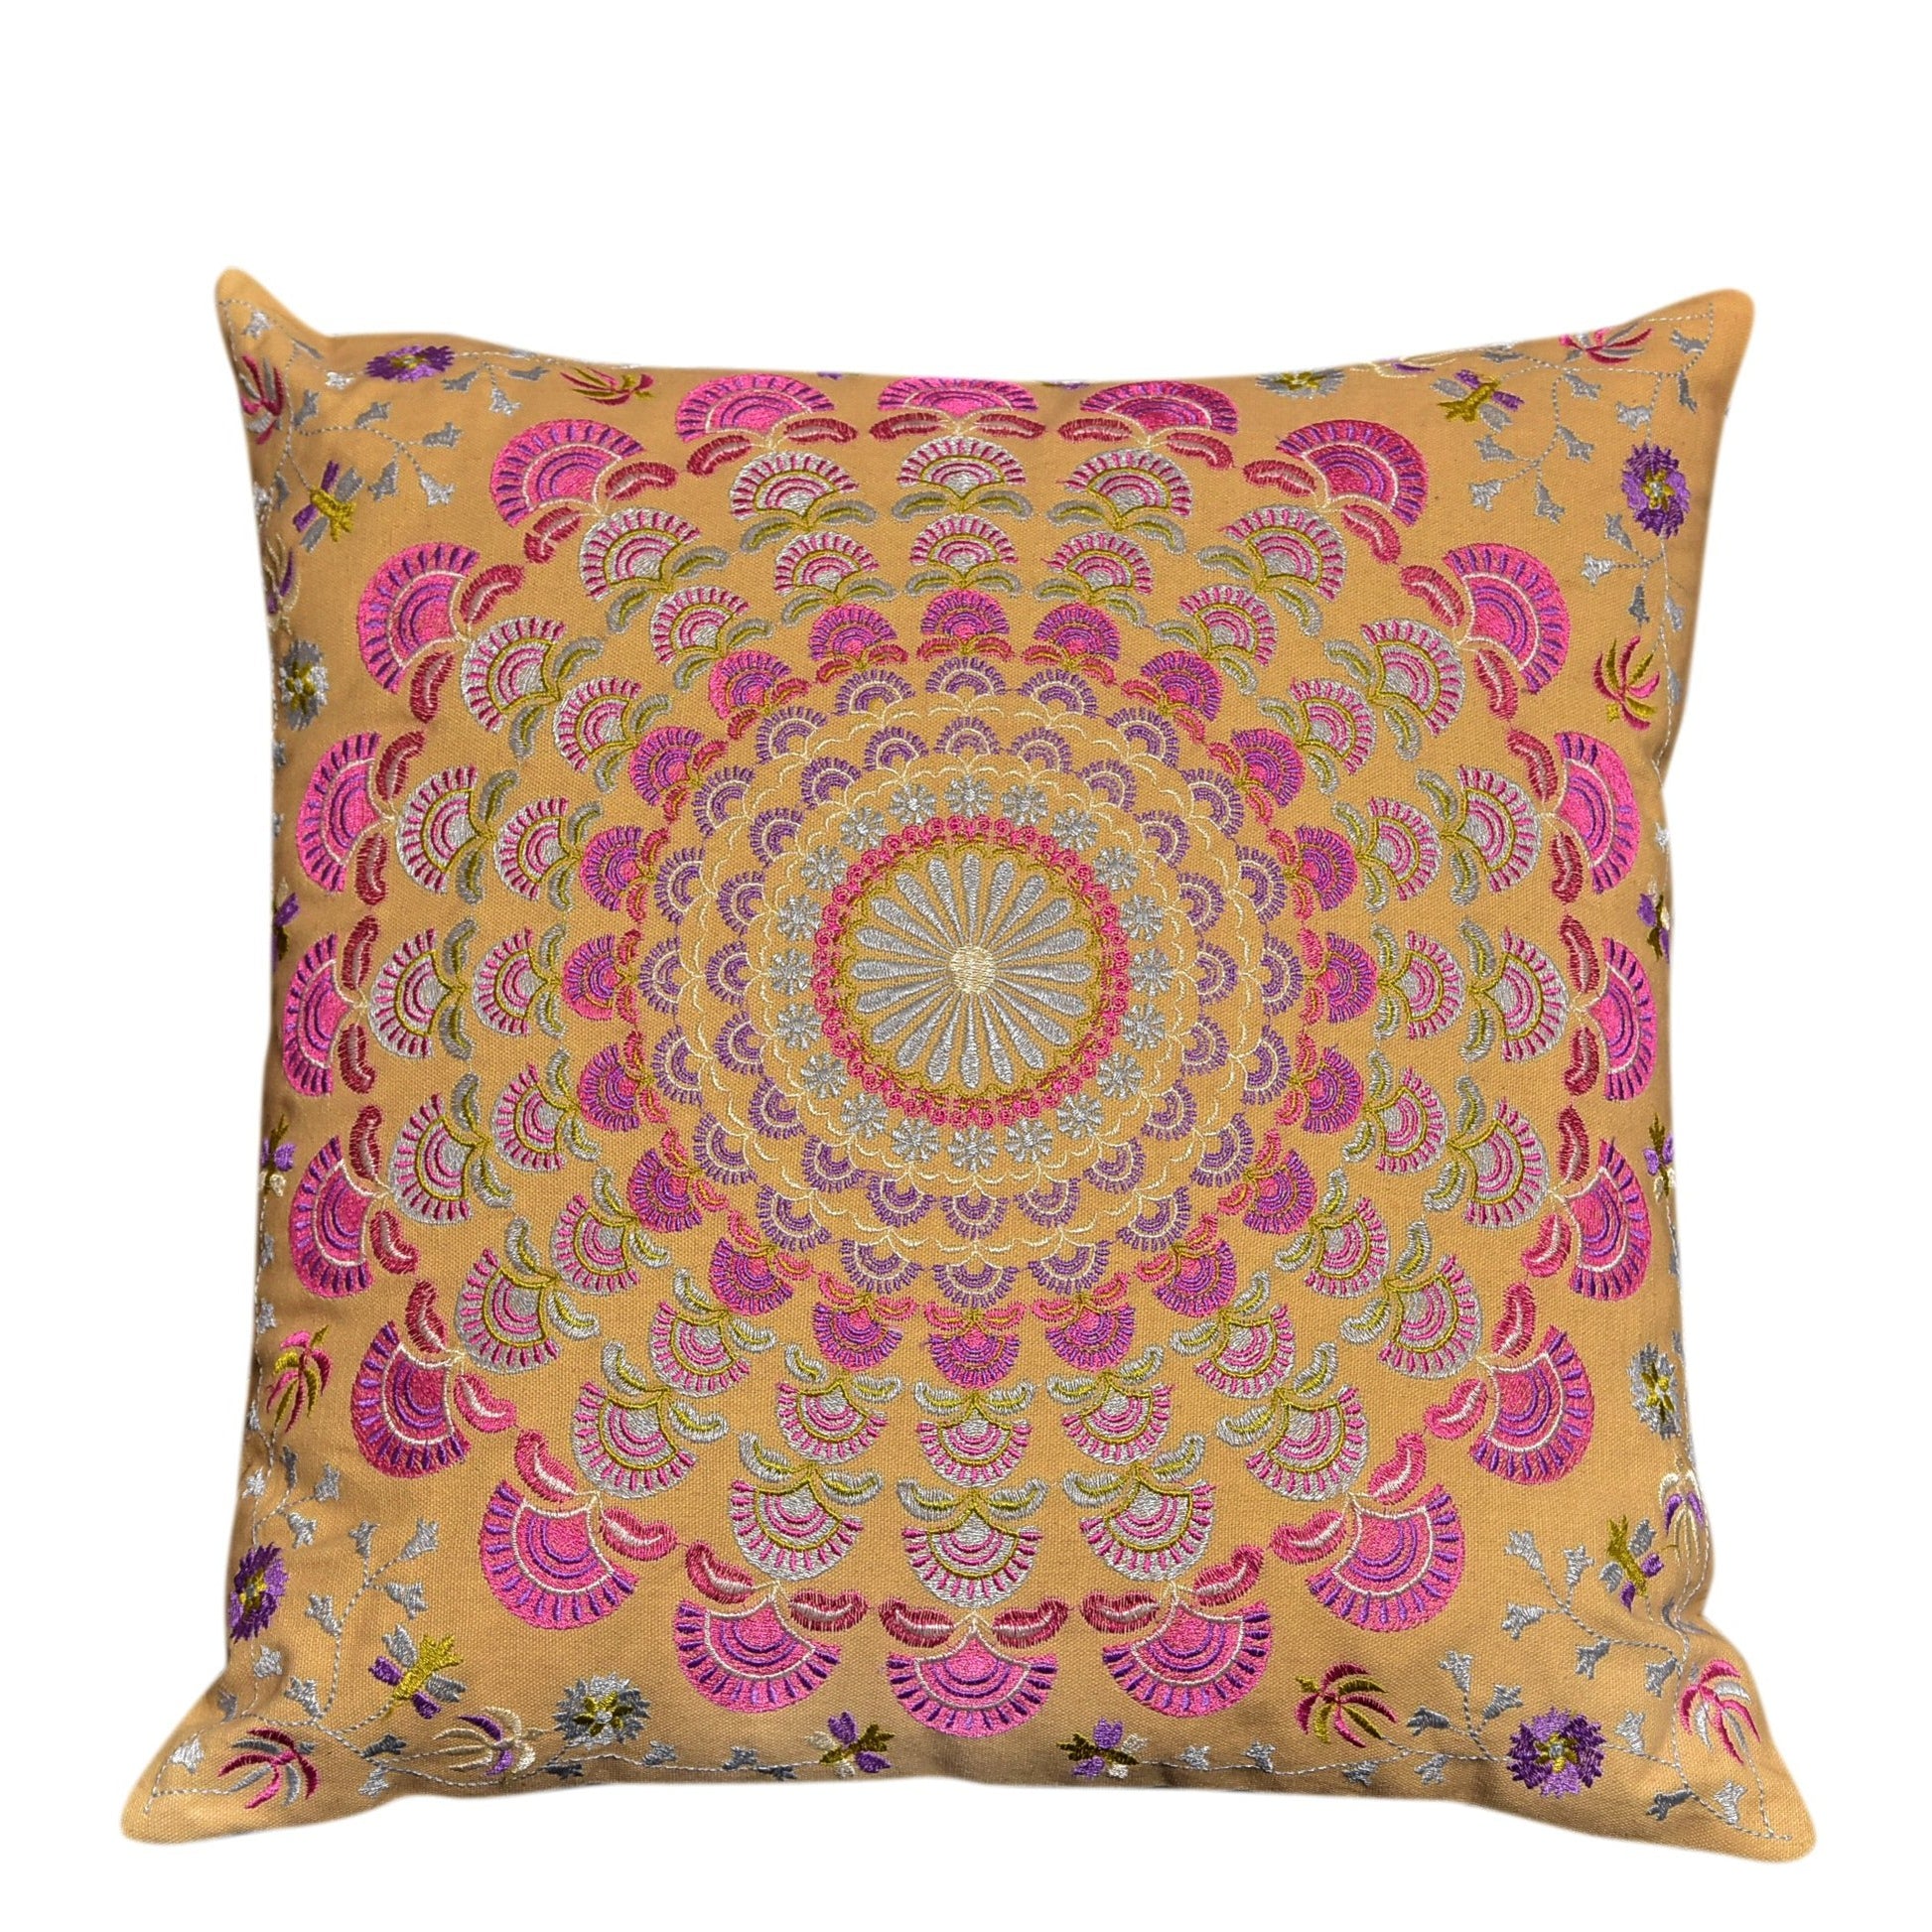 Neelofar's mandala cushion cover available in 18 x 18 Inches